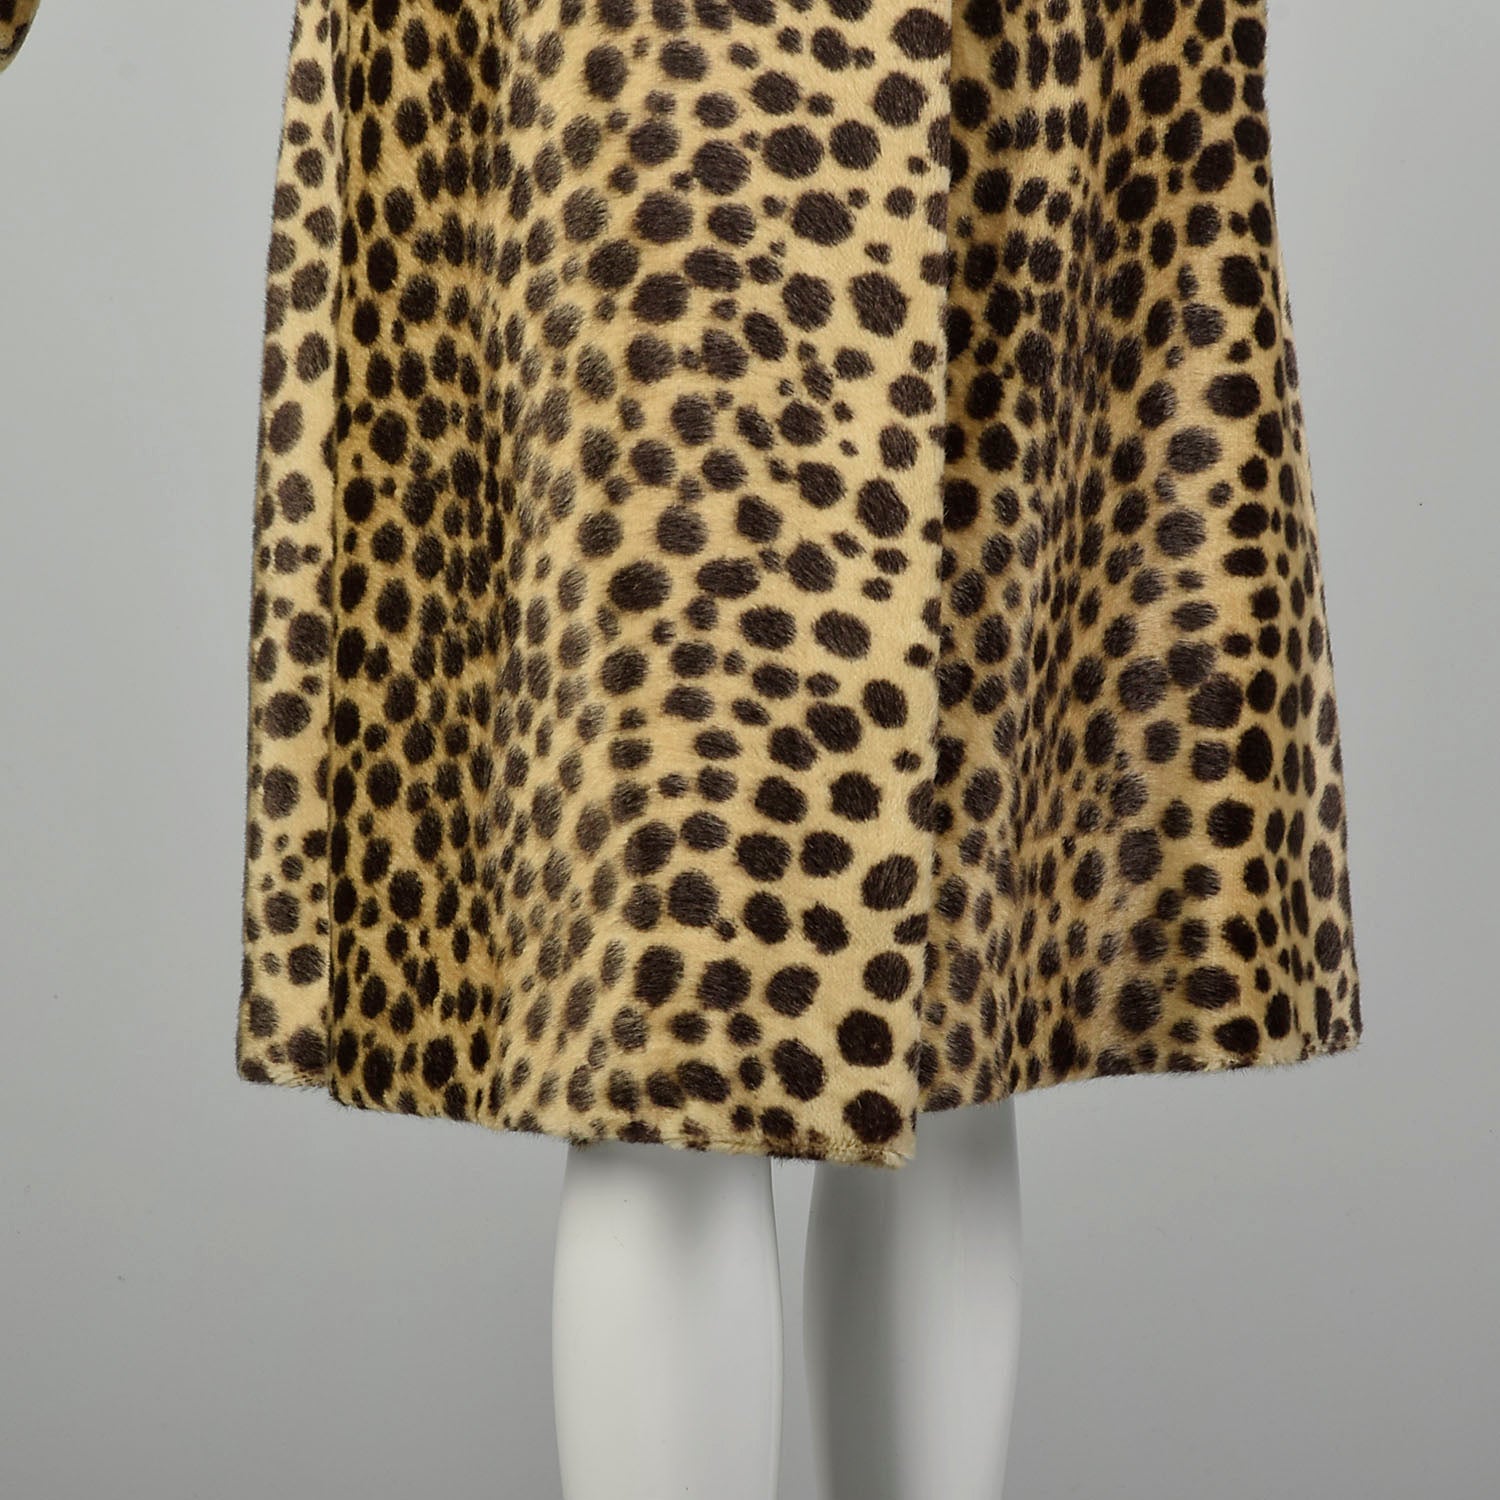 Medium 1960s Vegan Leopard Fur Winter Coat Mod Double Breasted Faux Fur